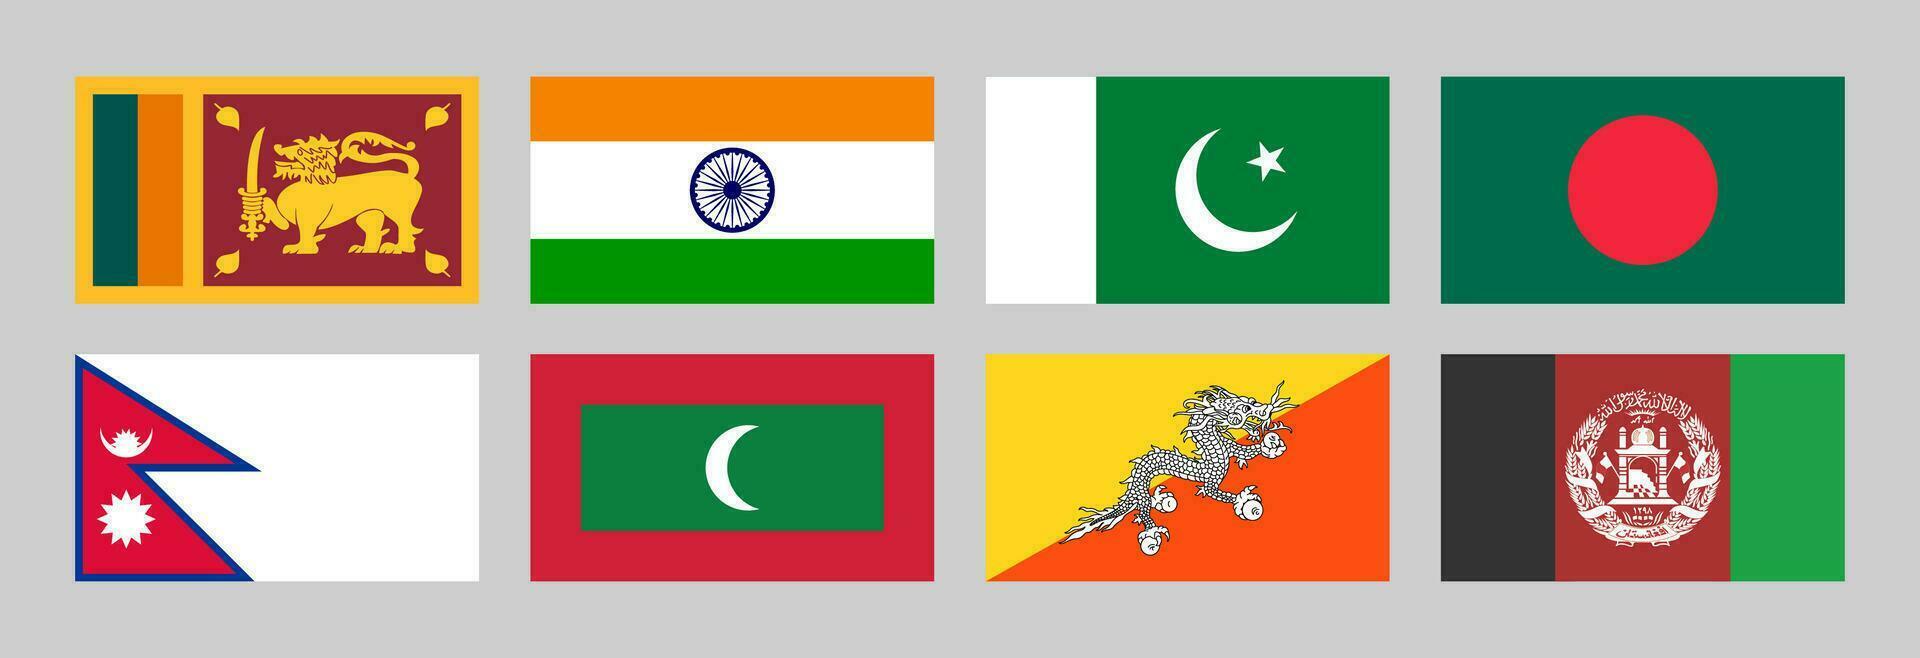 National Flaggen von Asien, sri lanka, Indien, Pakistan, Bangladesch, Nepal, Malediven, Bhutan, Afghanistan vektor